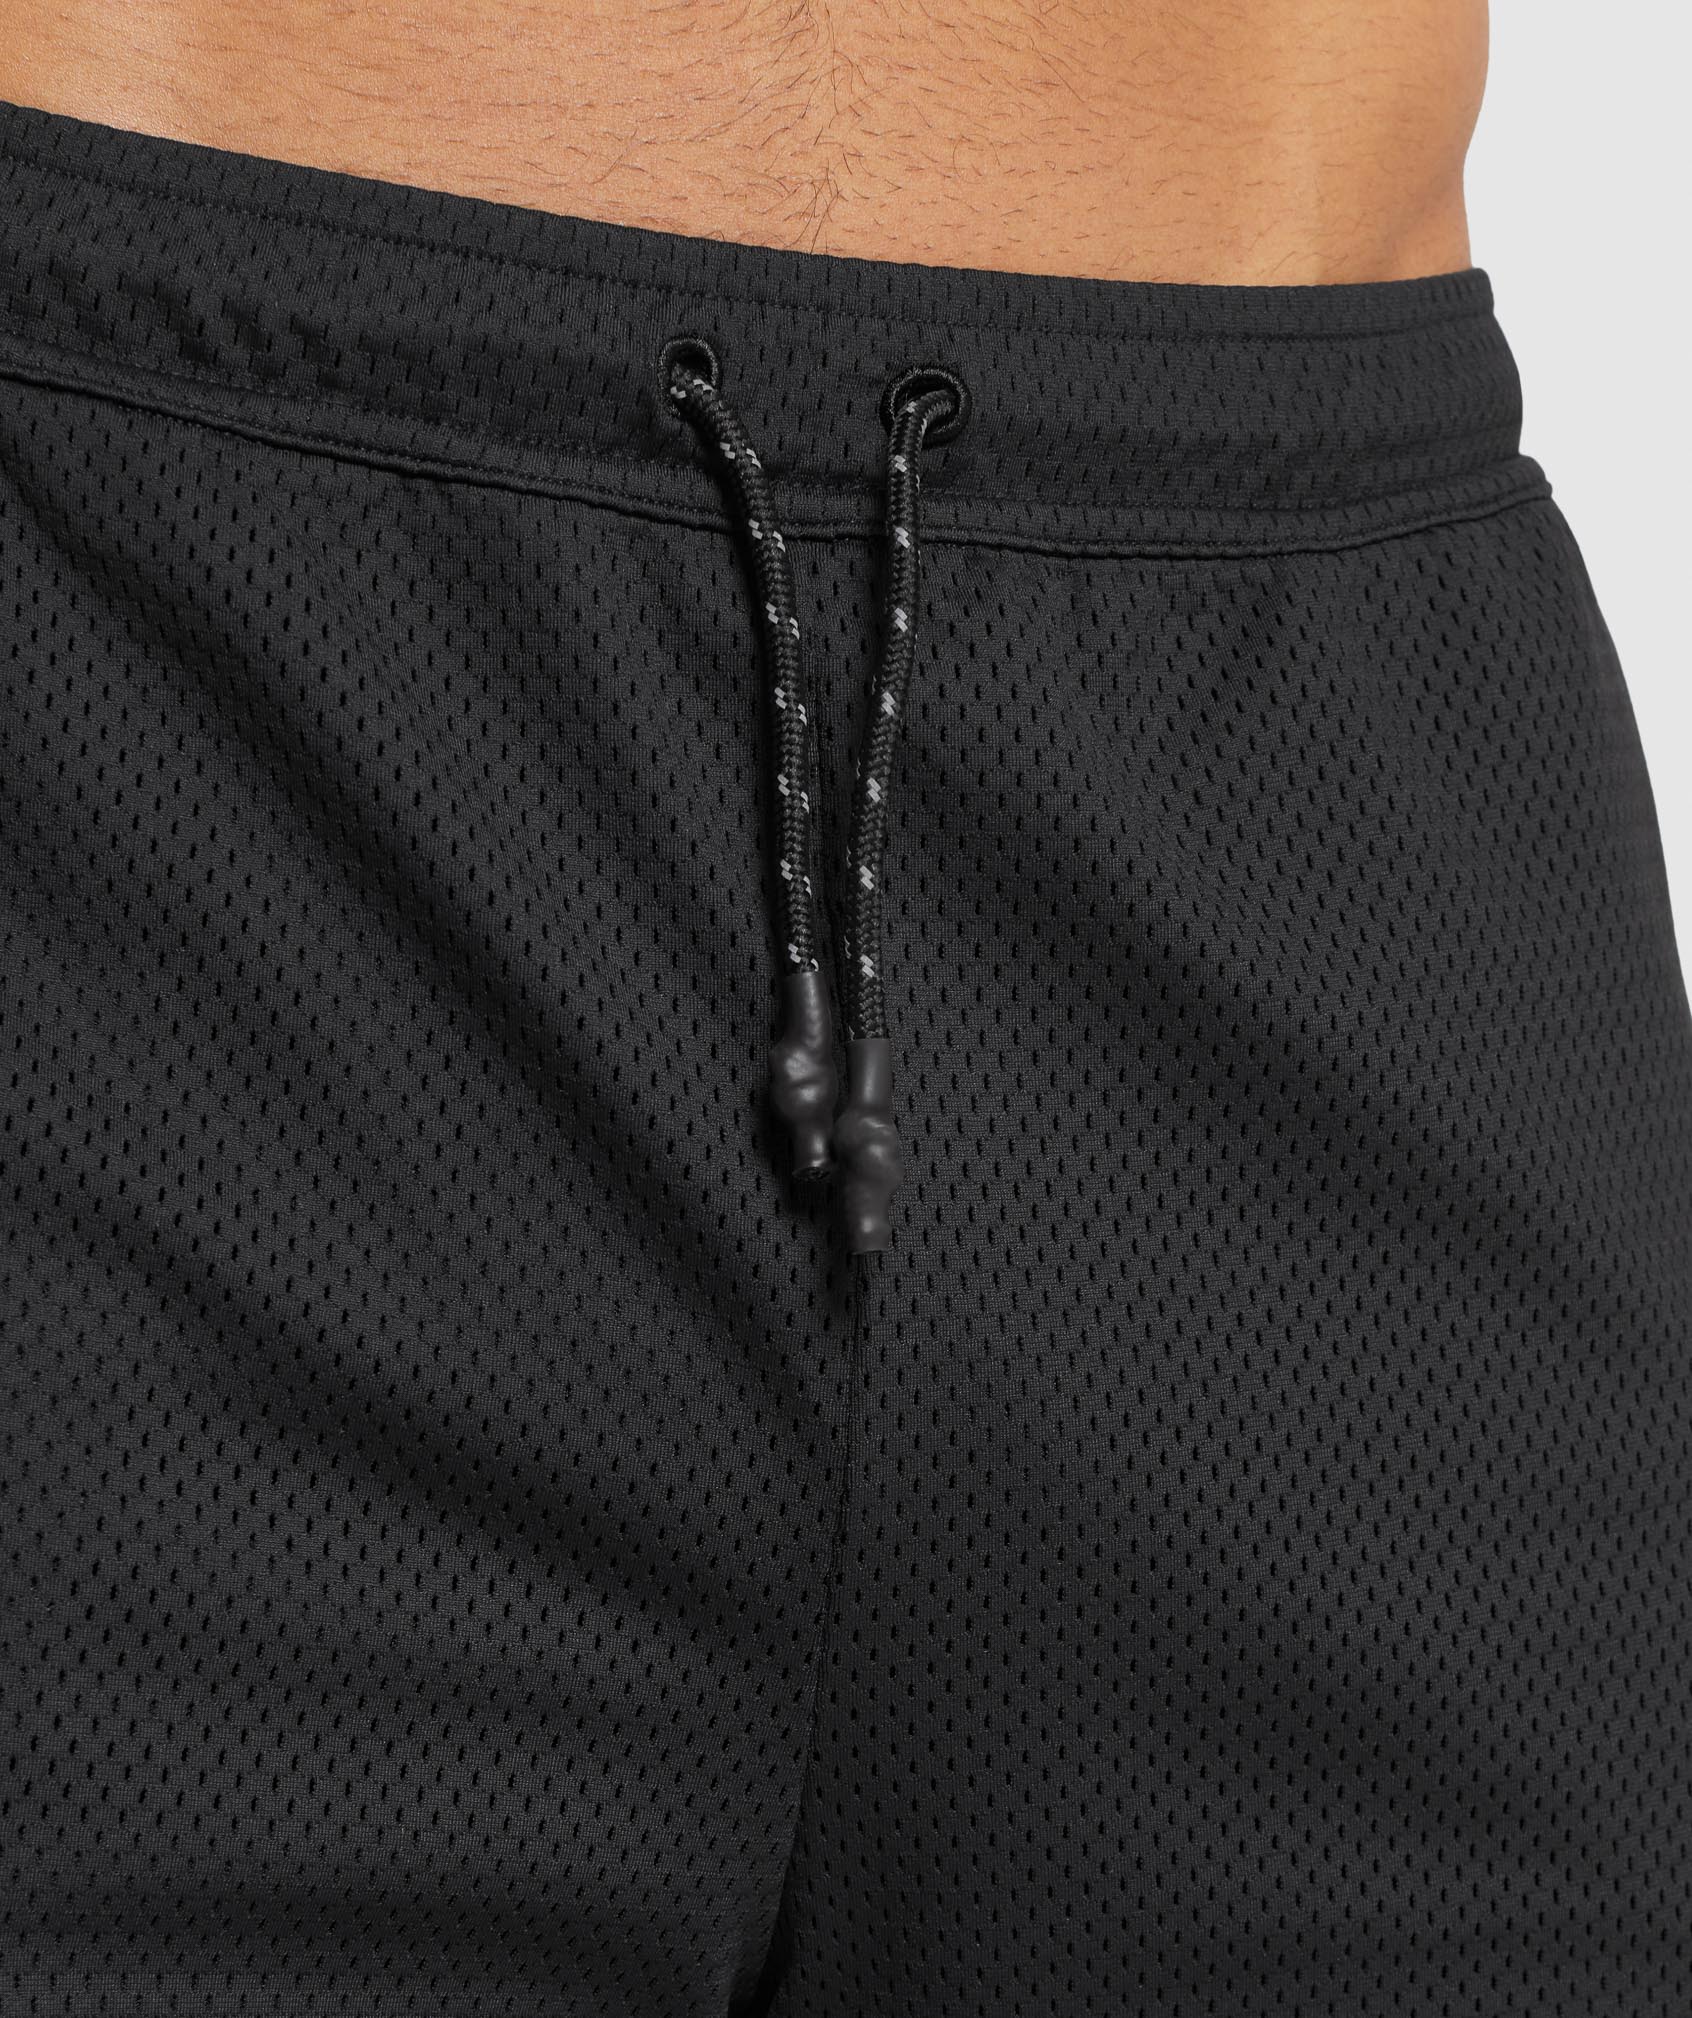 Gymshark//Steve Cook Mesh Shorts in Black - view 4